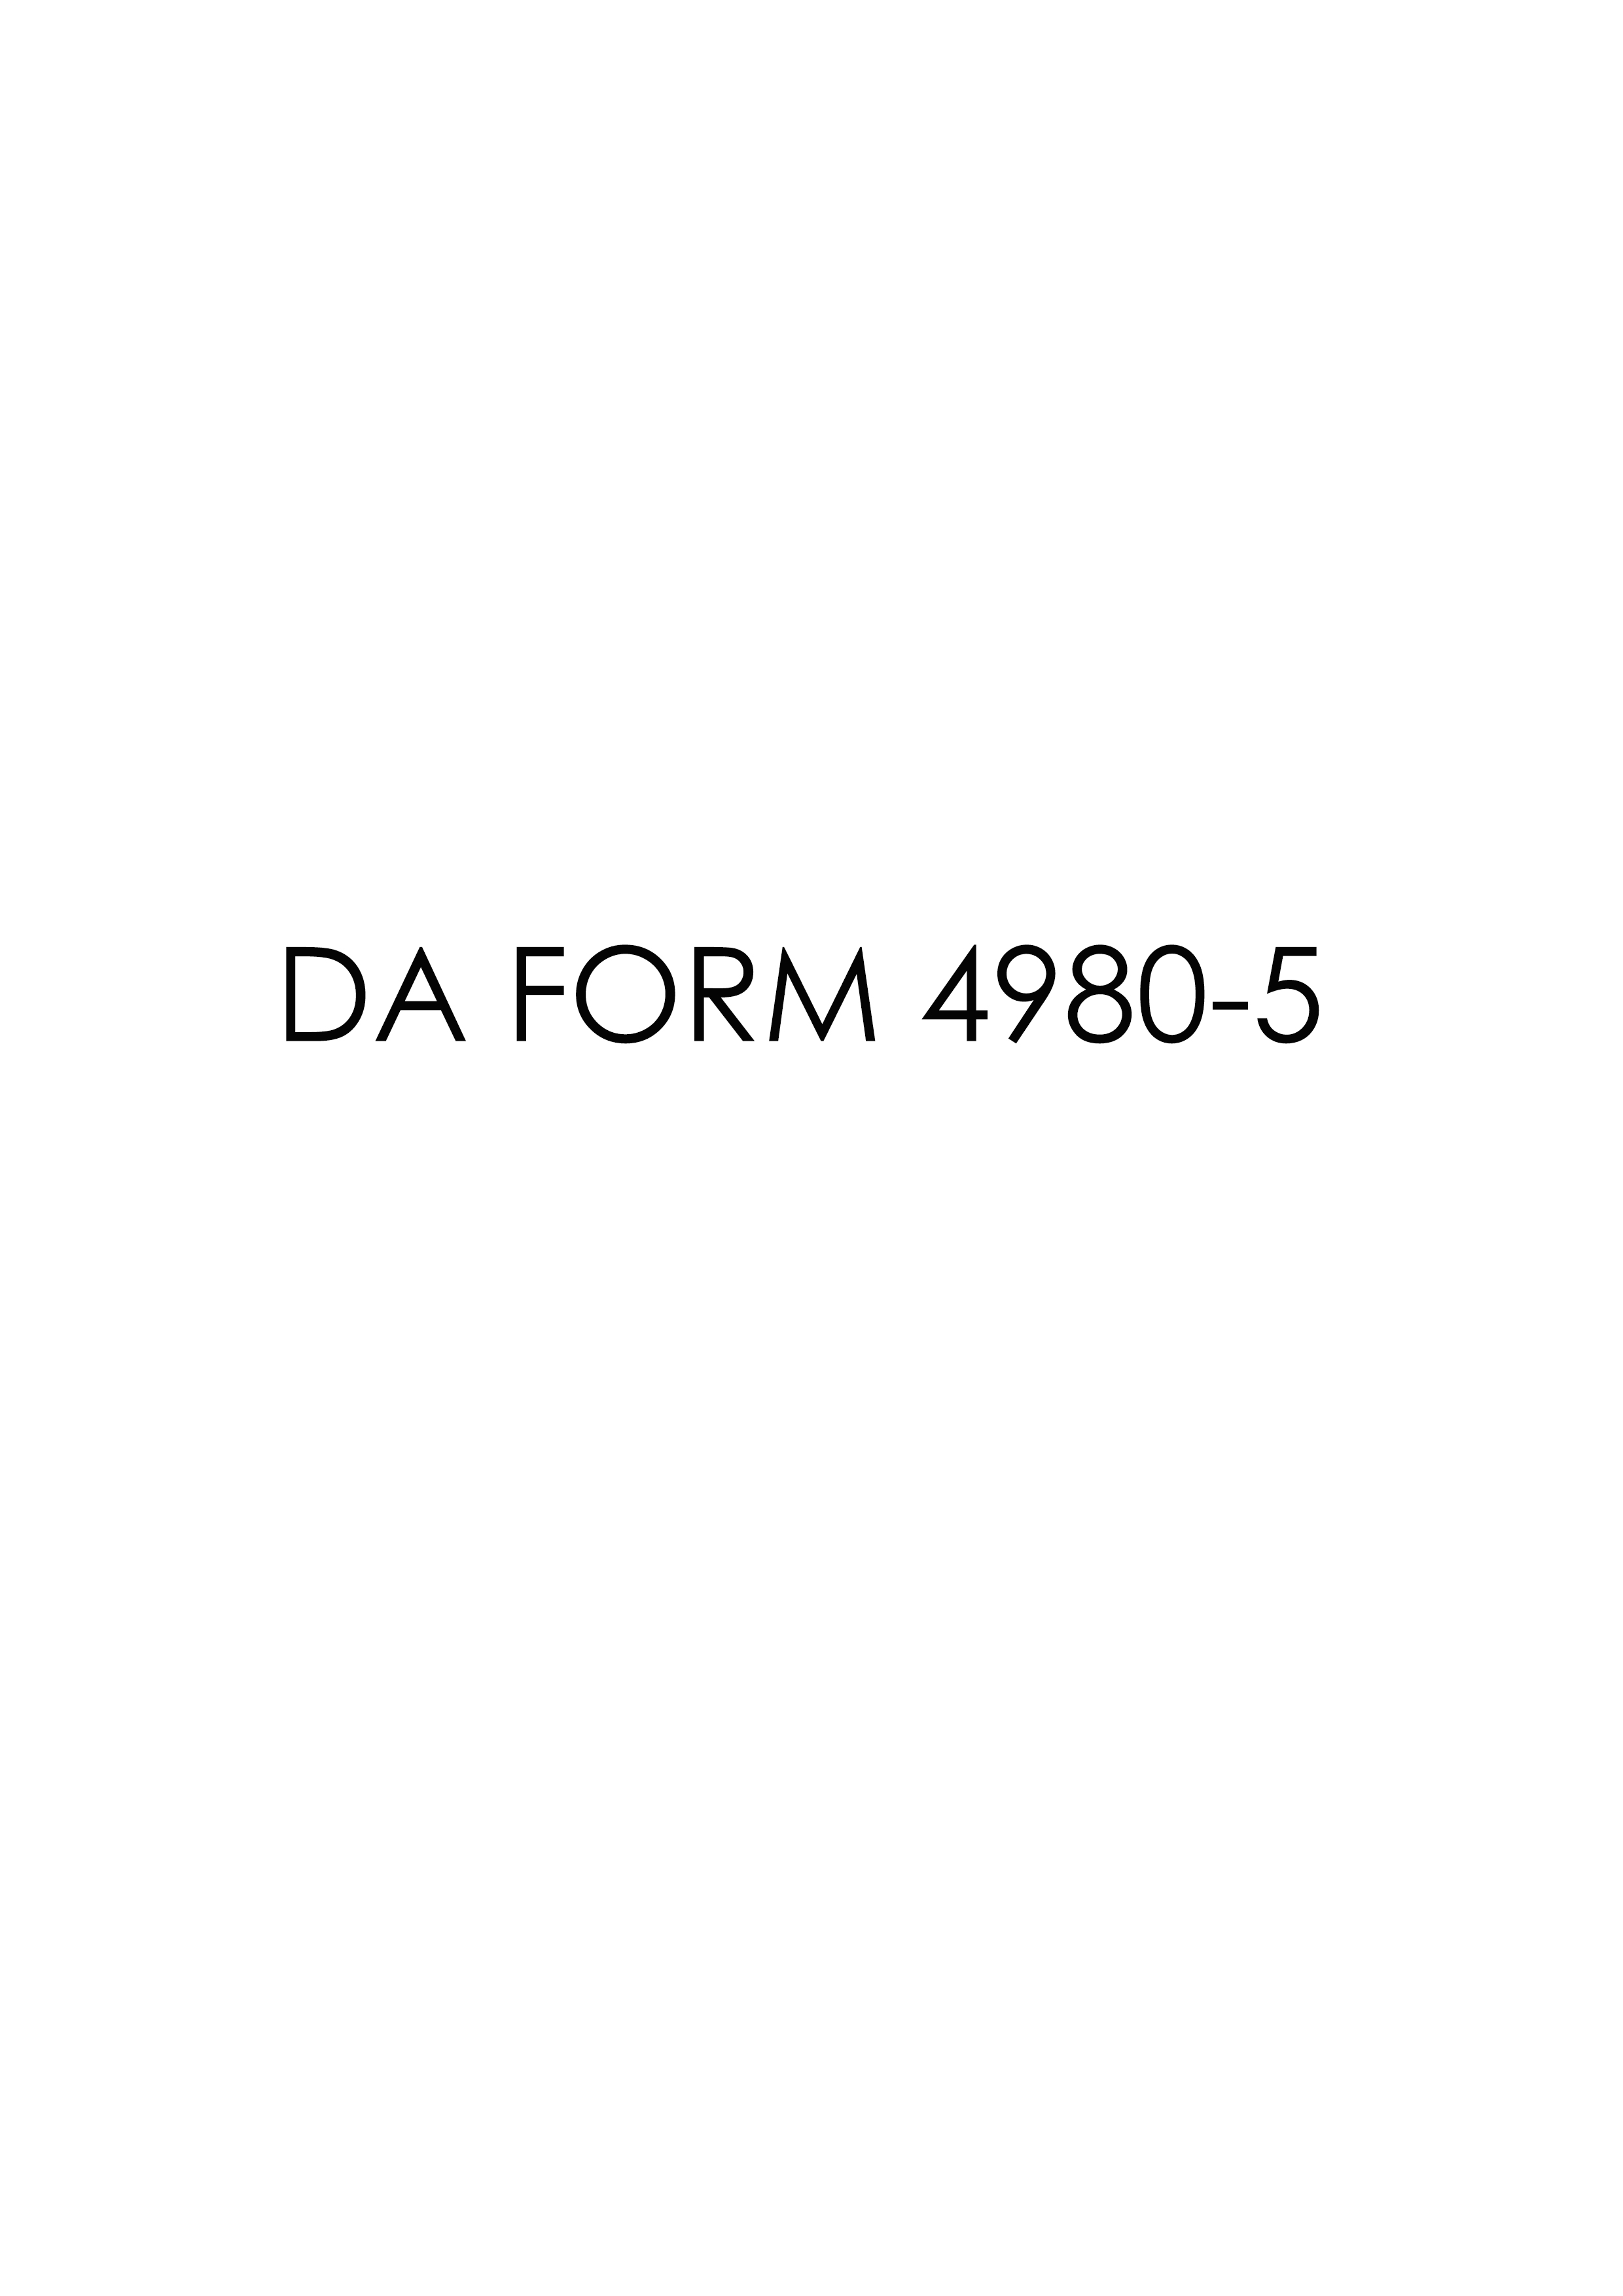 da Form 4980-5 fillable